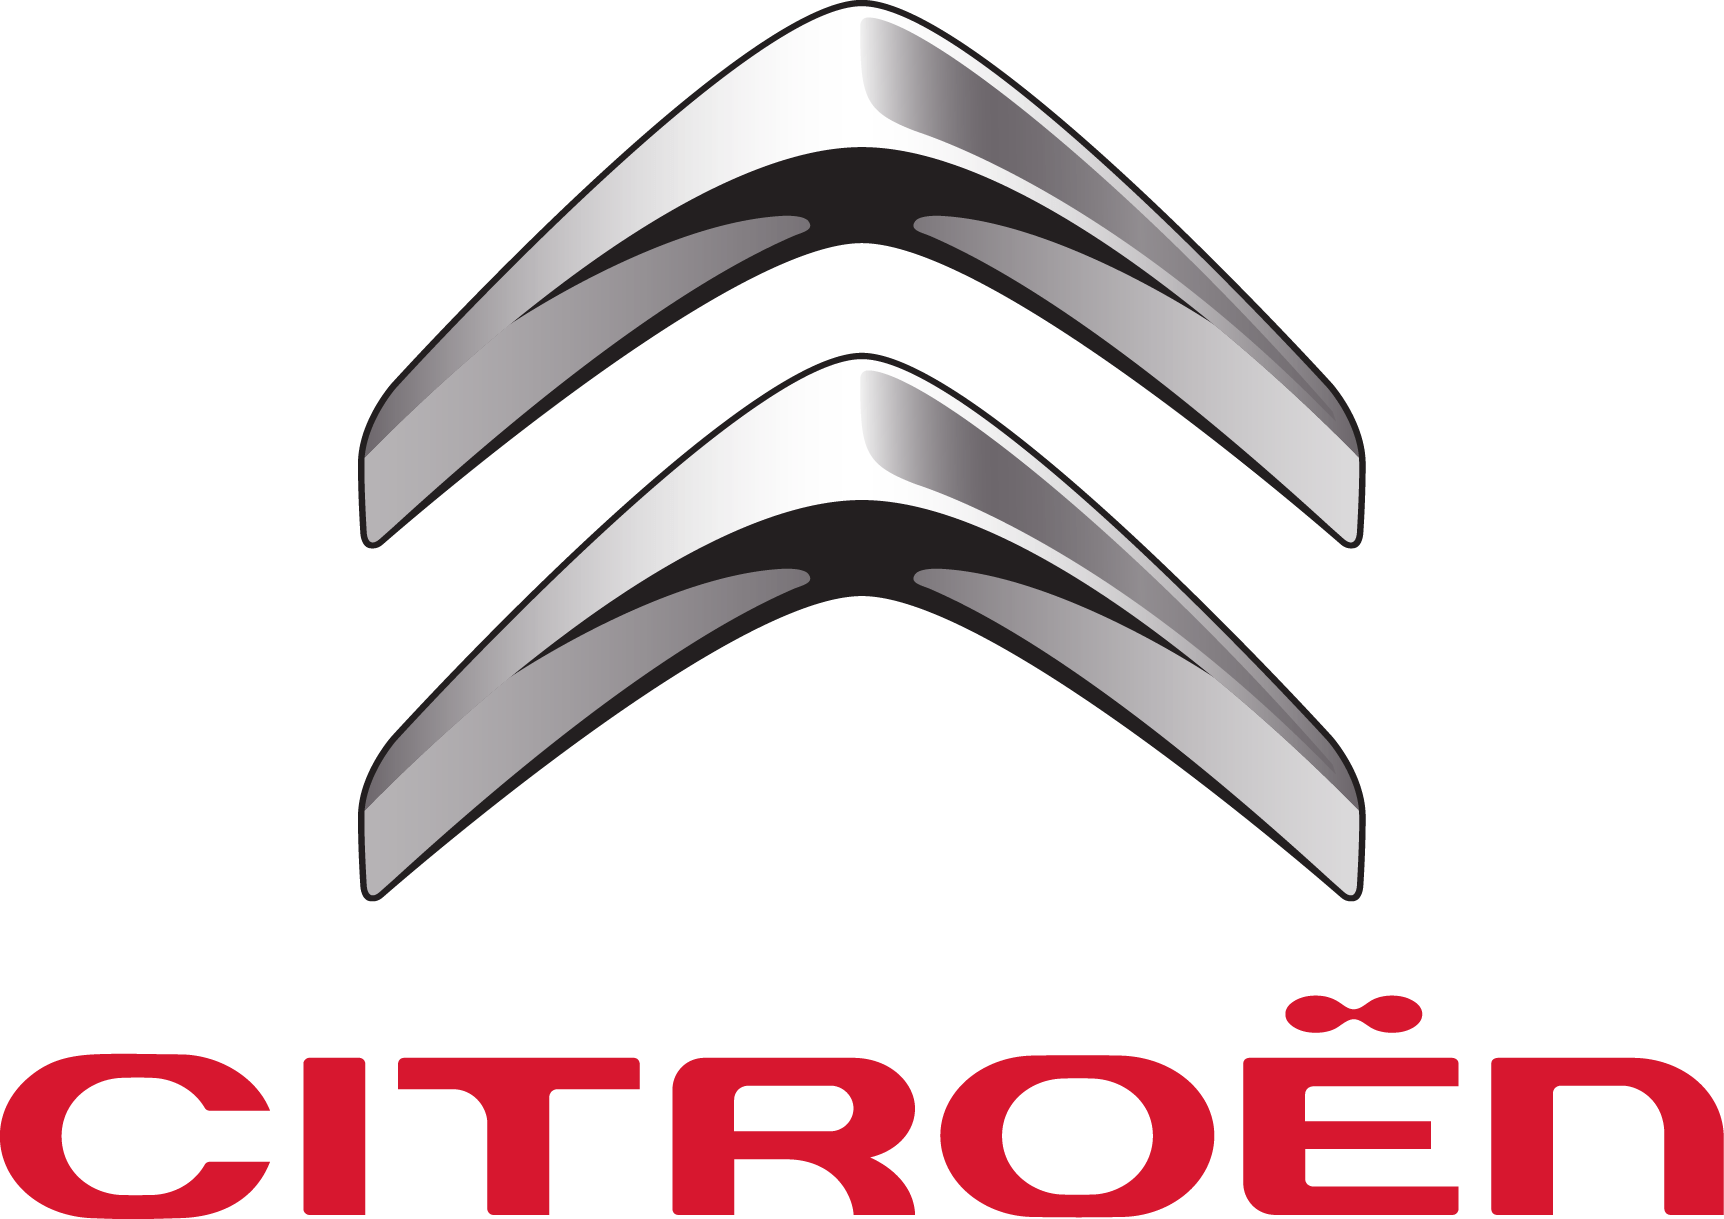 Marca em destaque selecionada Citroën